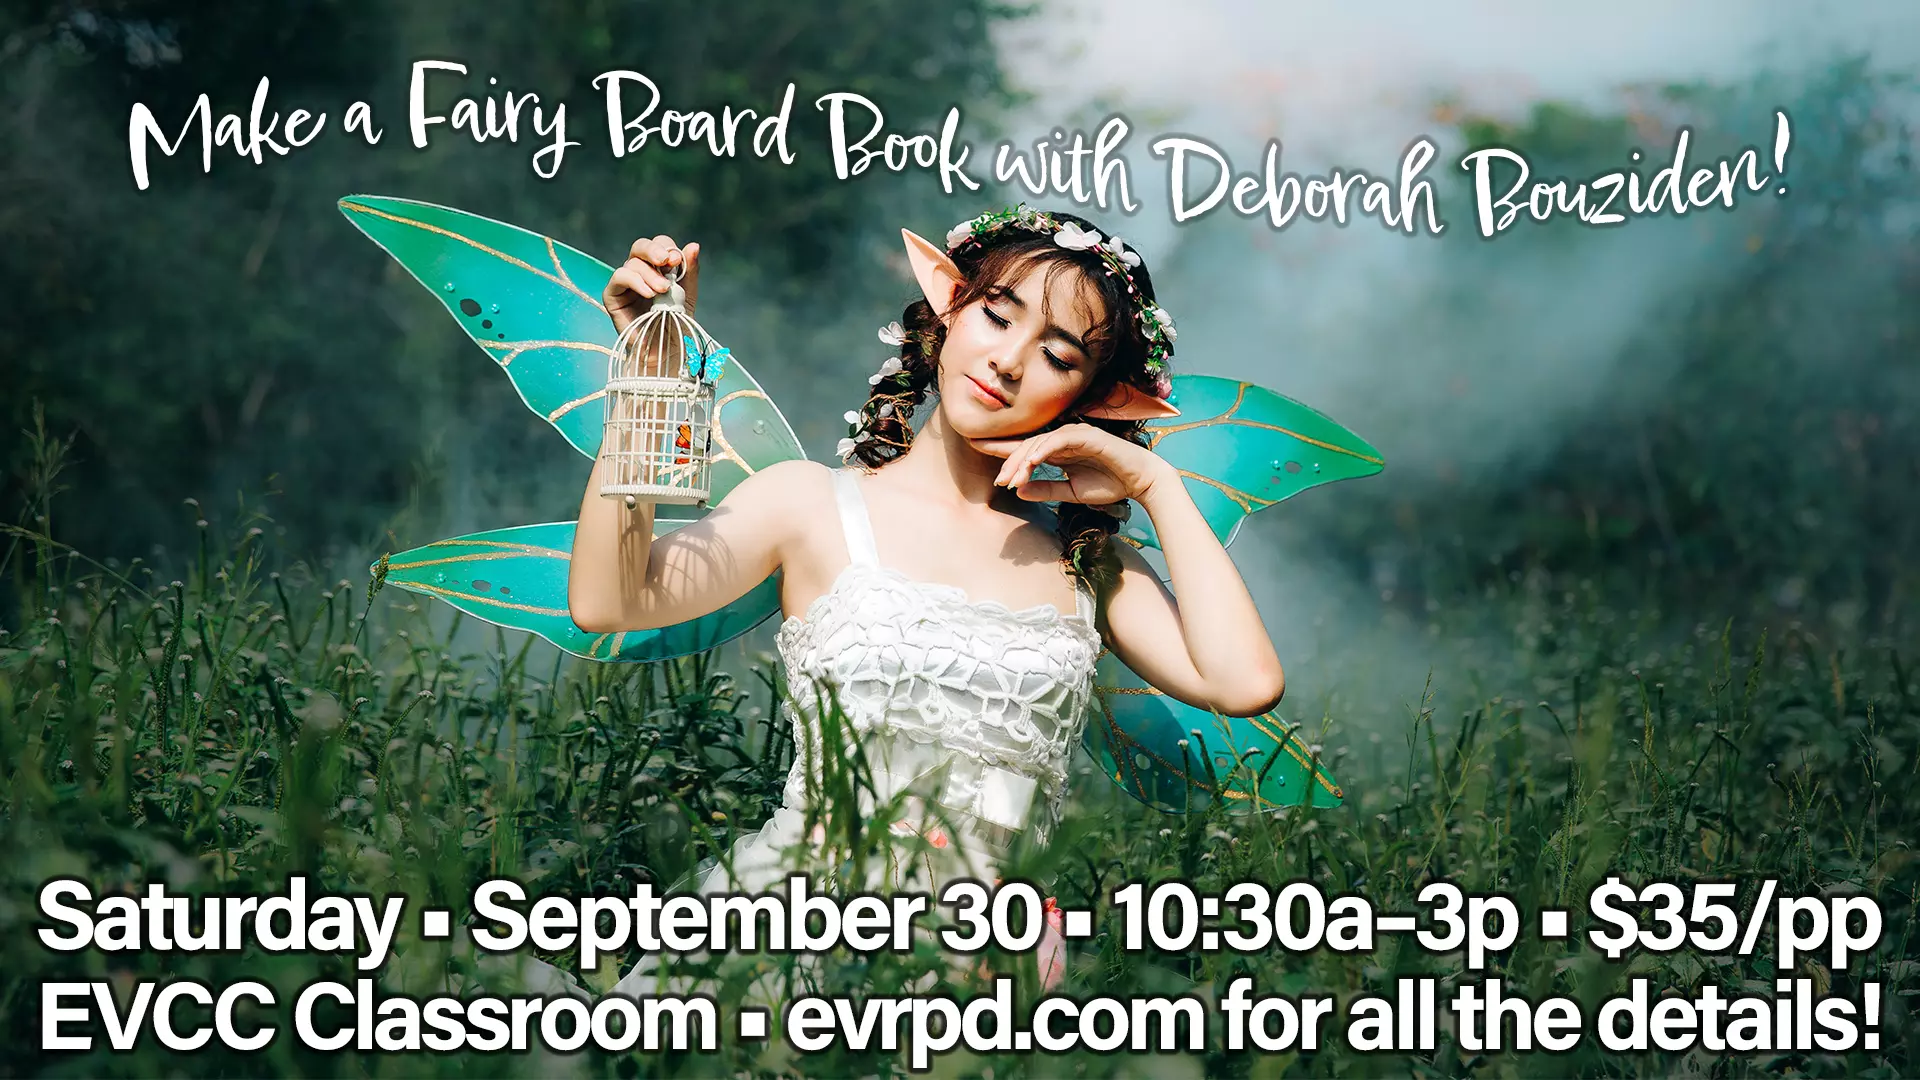 Make a Fairy Board Book with Deborah Bouziden